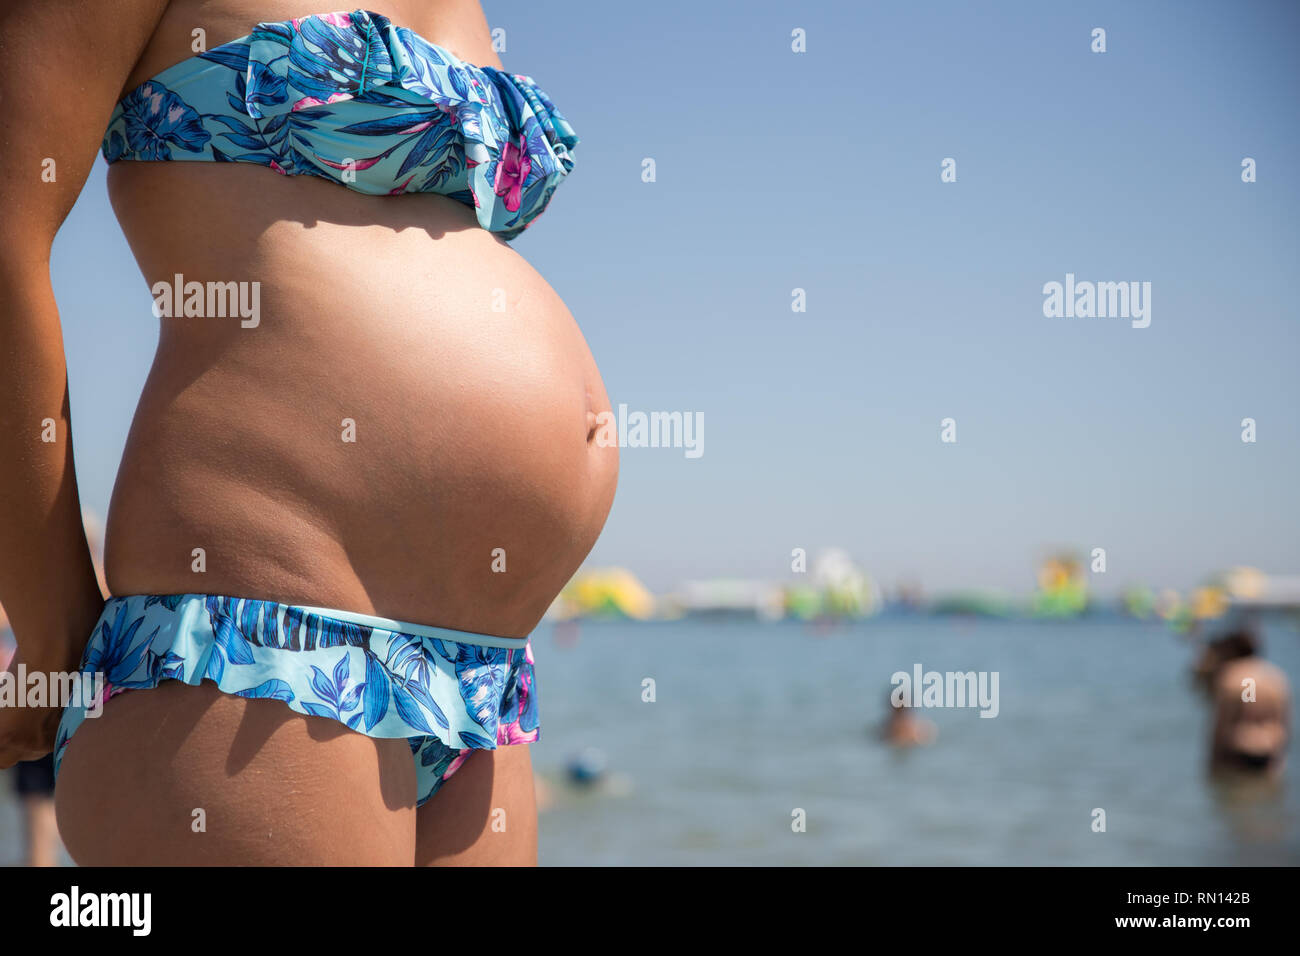 Pregnant bellies a bikini